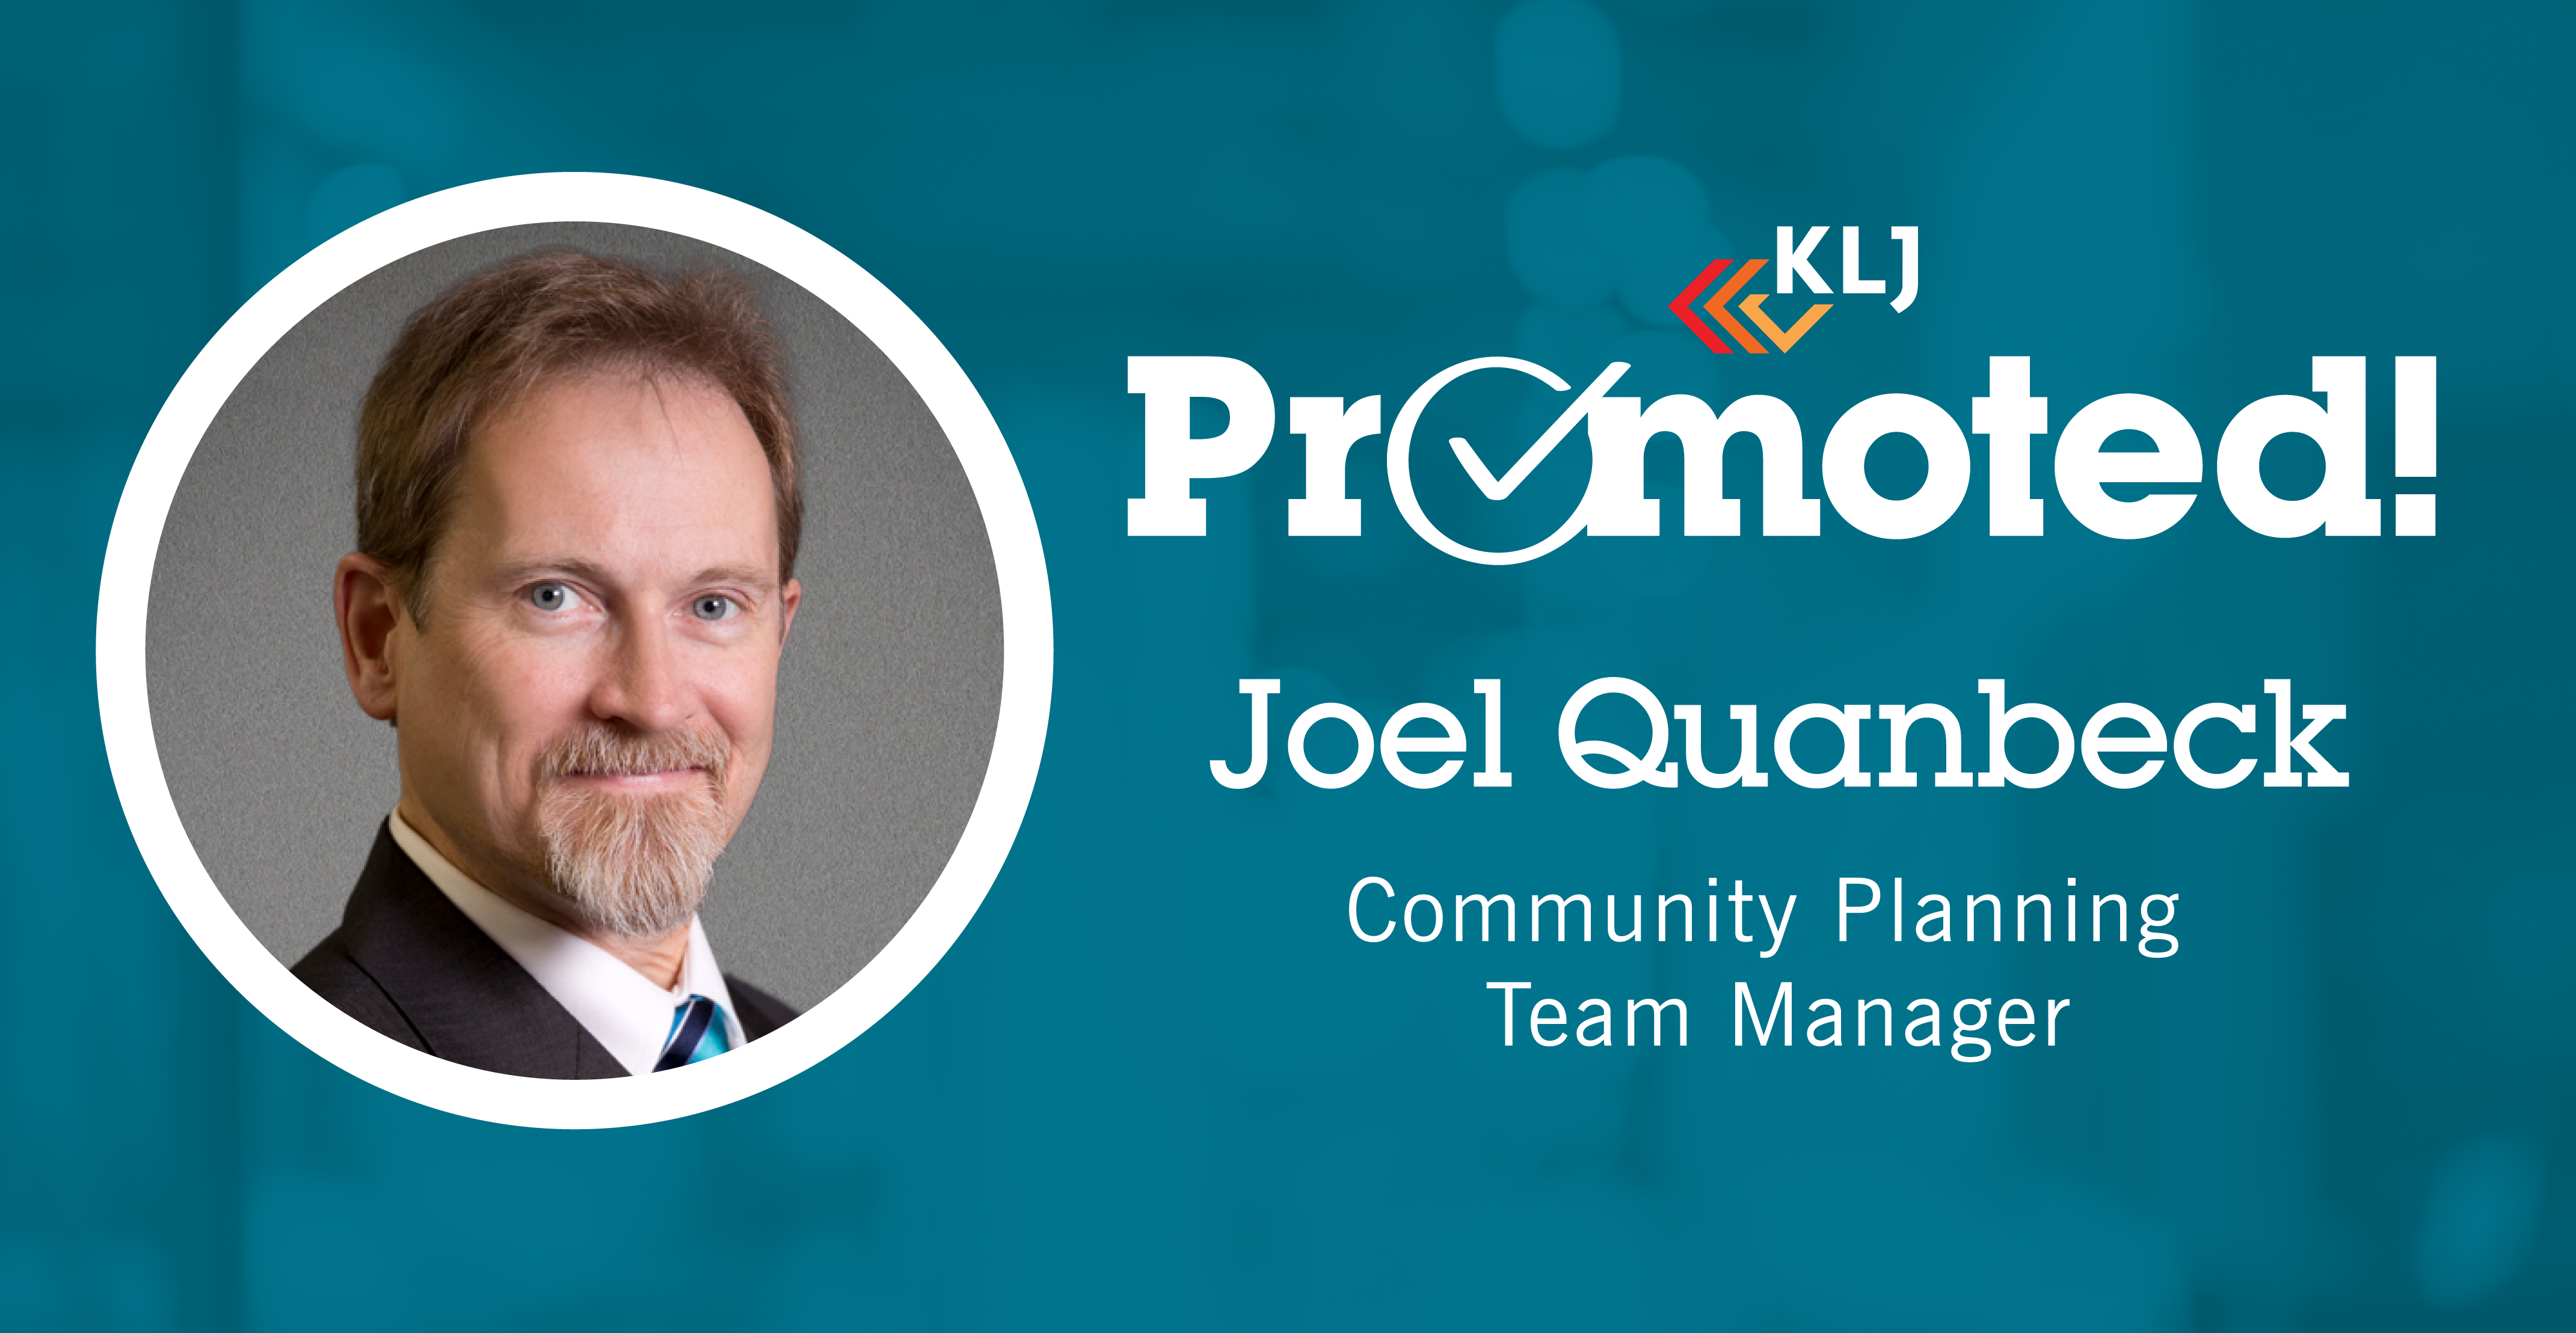 KLJ Promotes Quanbeck to Community Planning Team Manager